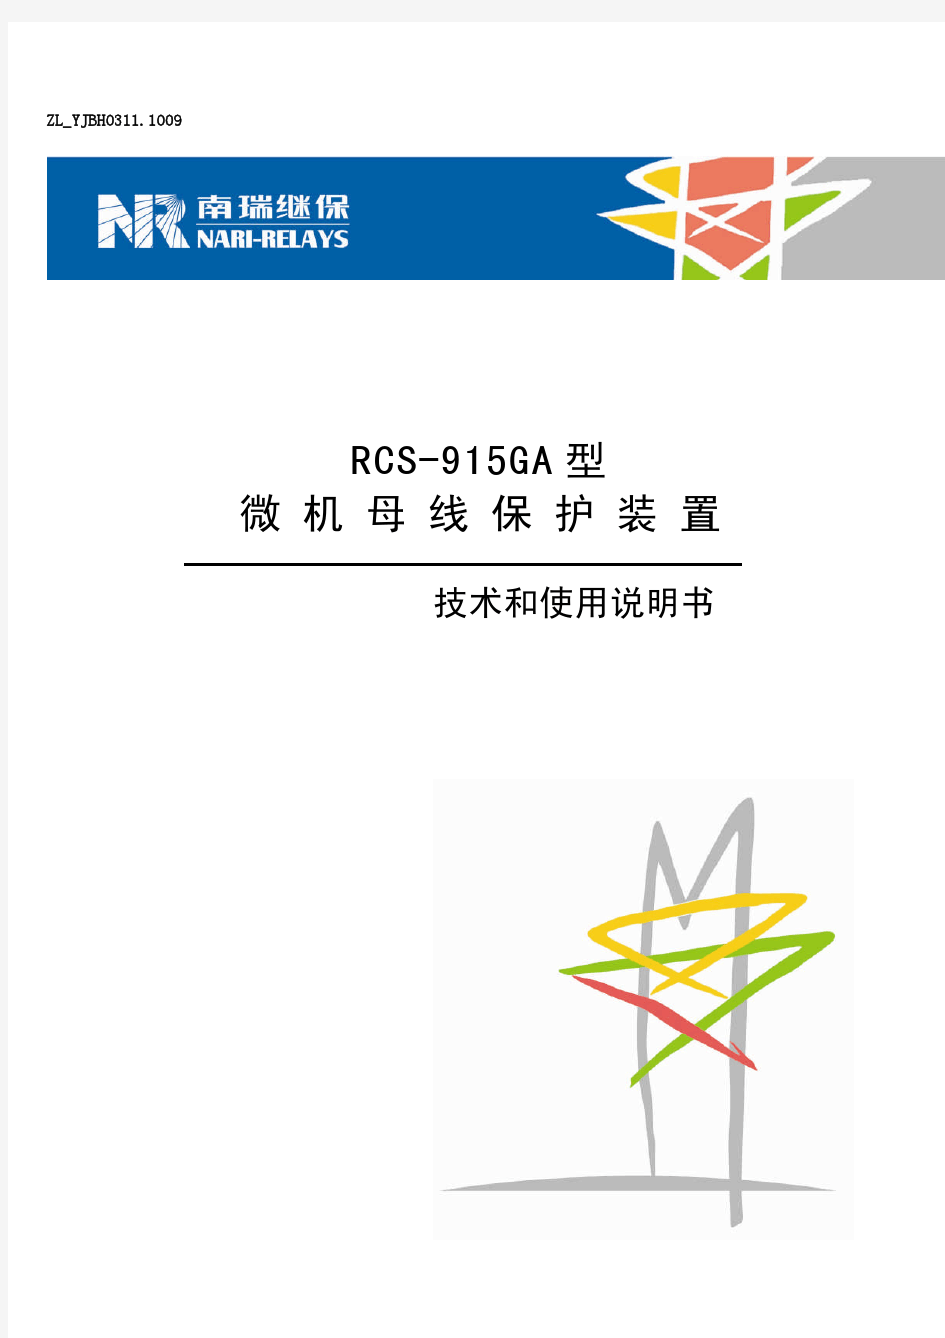 RCS-915GA_X_说明书_国内中文_标准版_X_R1.02_(ZL_YJBH0311.1009)